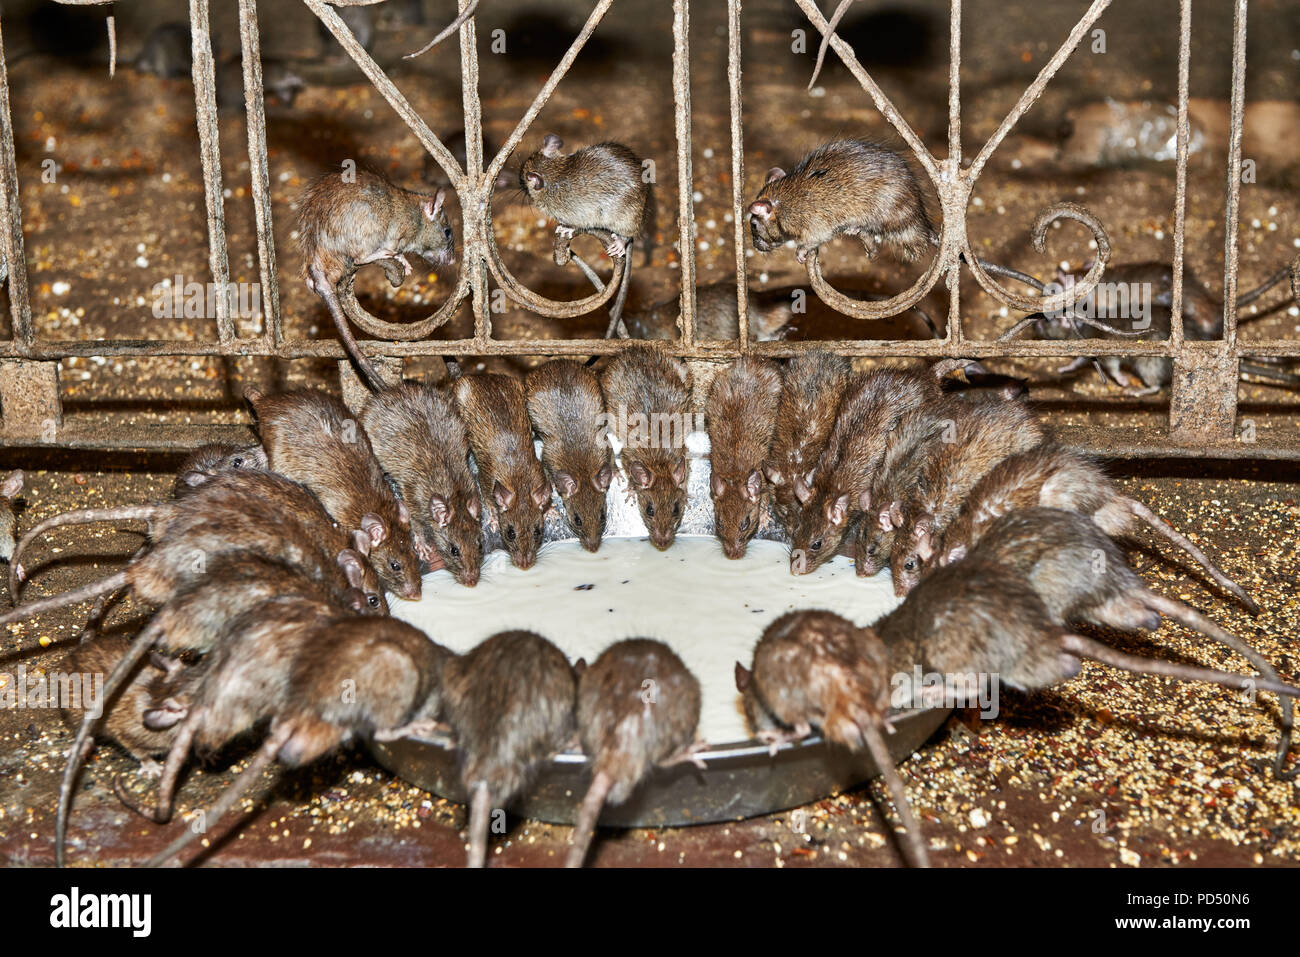 Rats feeding on a bowl with milk in Temple of Rats, Karni Mata Temple, Deshnoke, Rajasthan, India Stock Photo